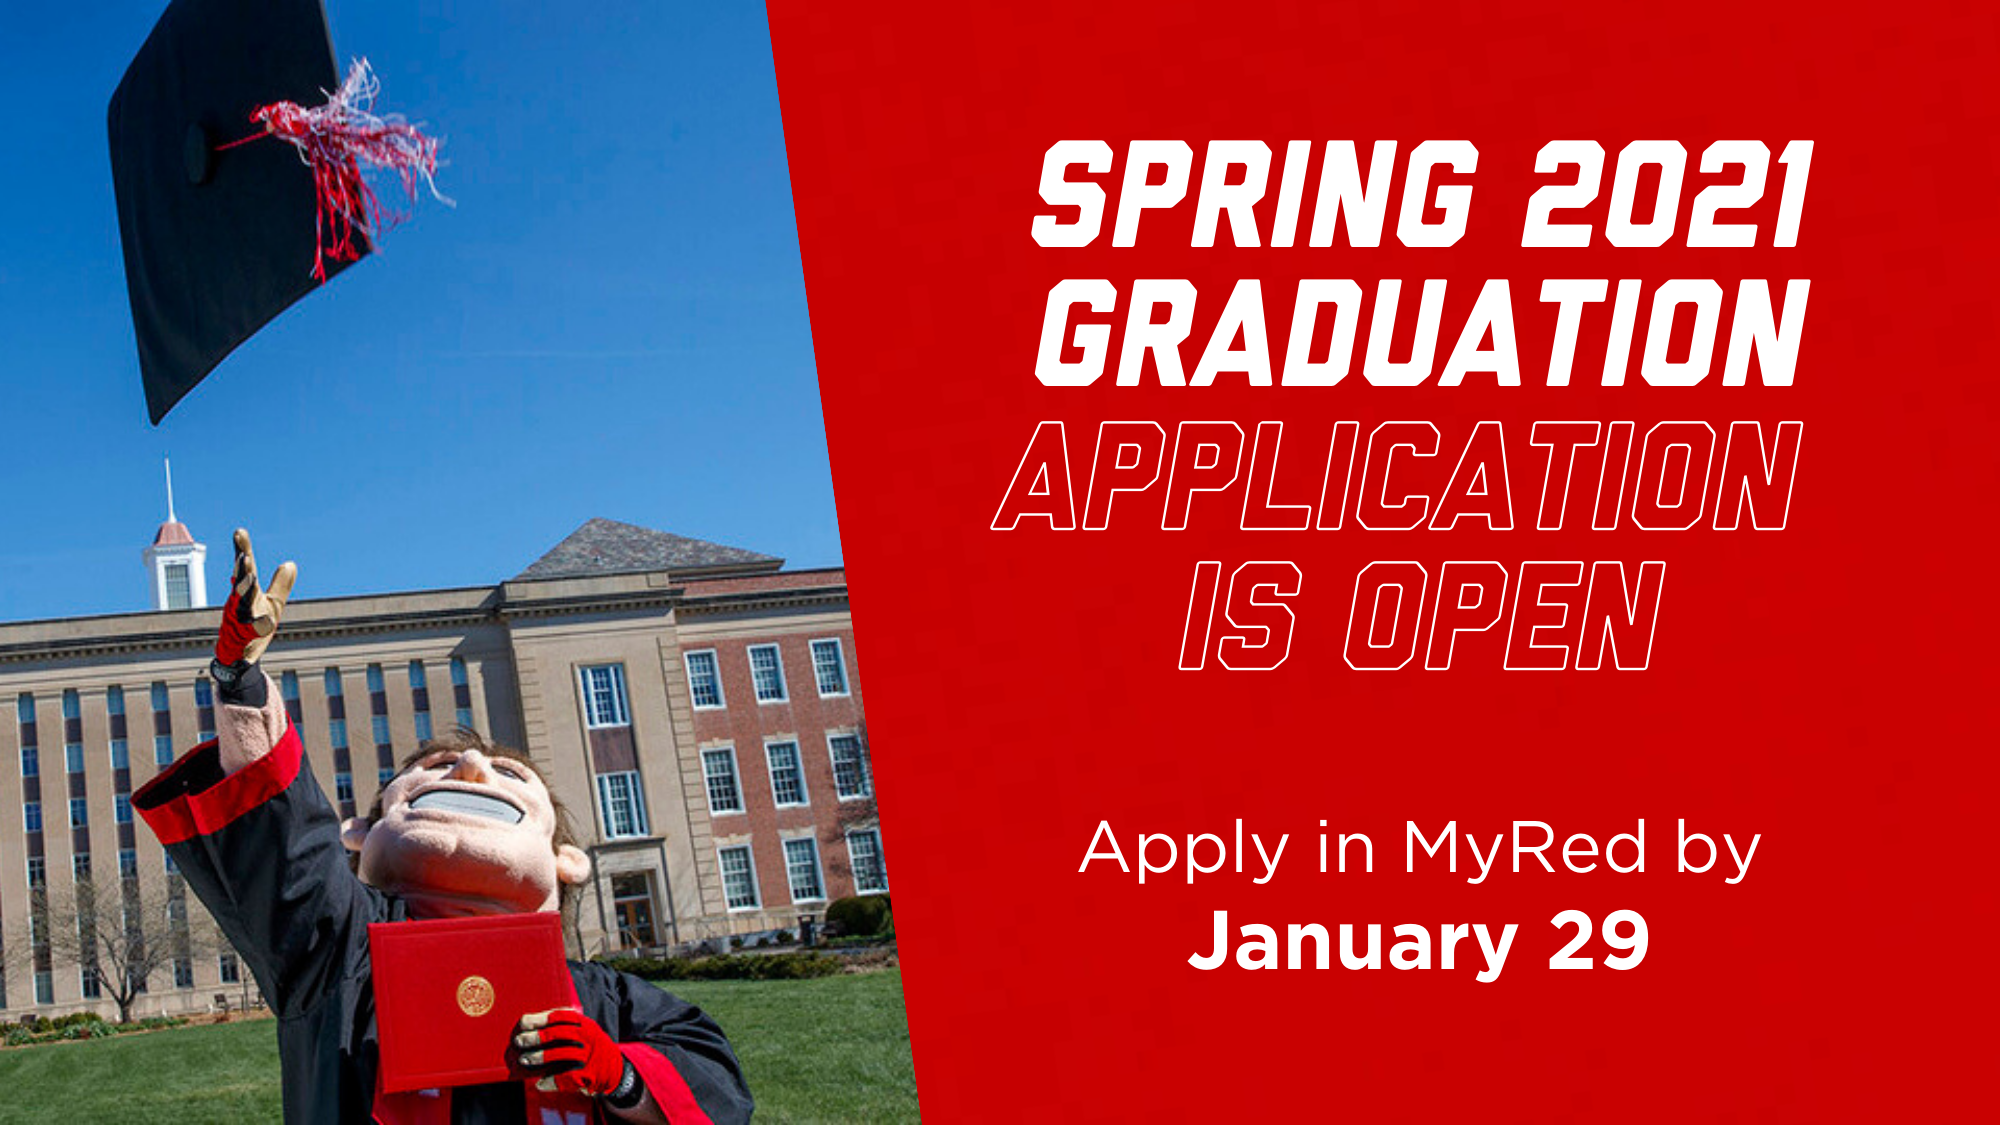 Spring 2021 graduation application deadline is Jan. 29.